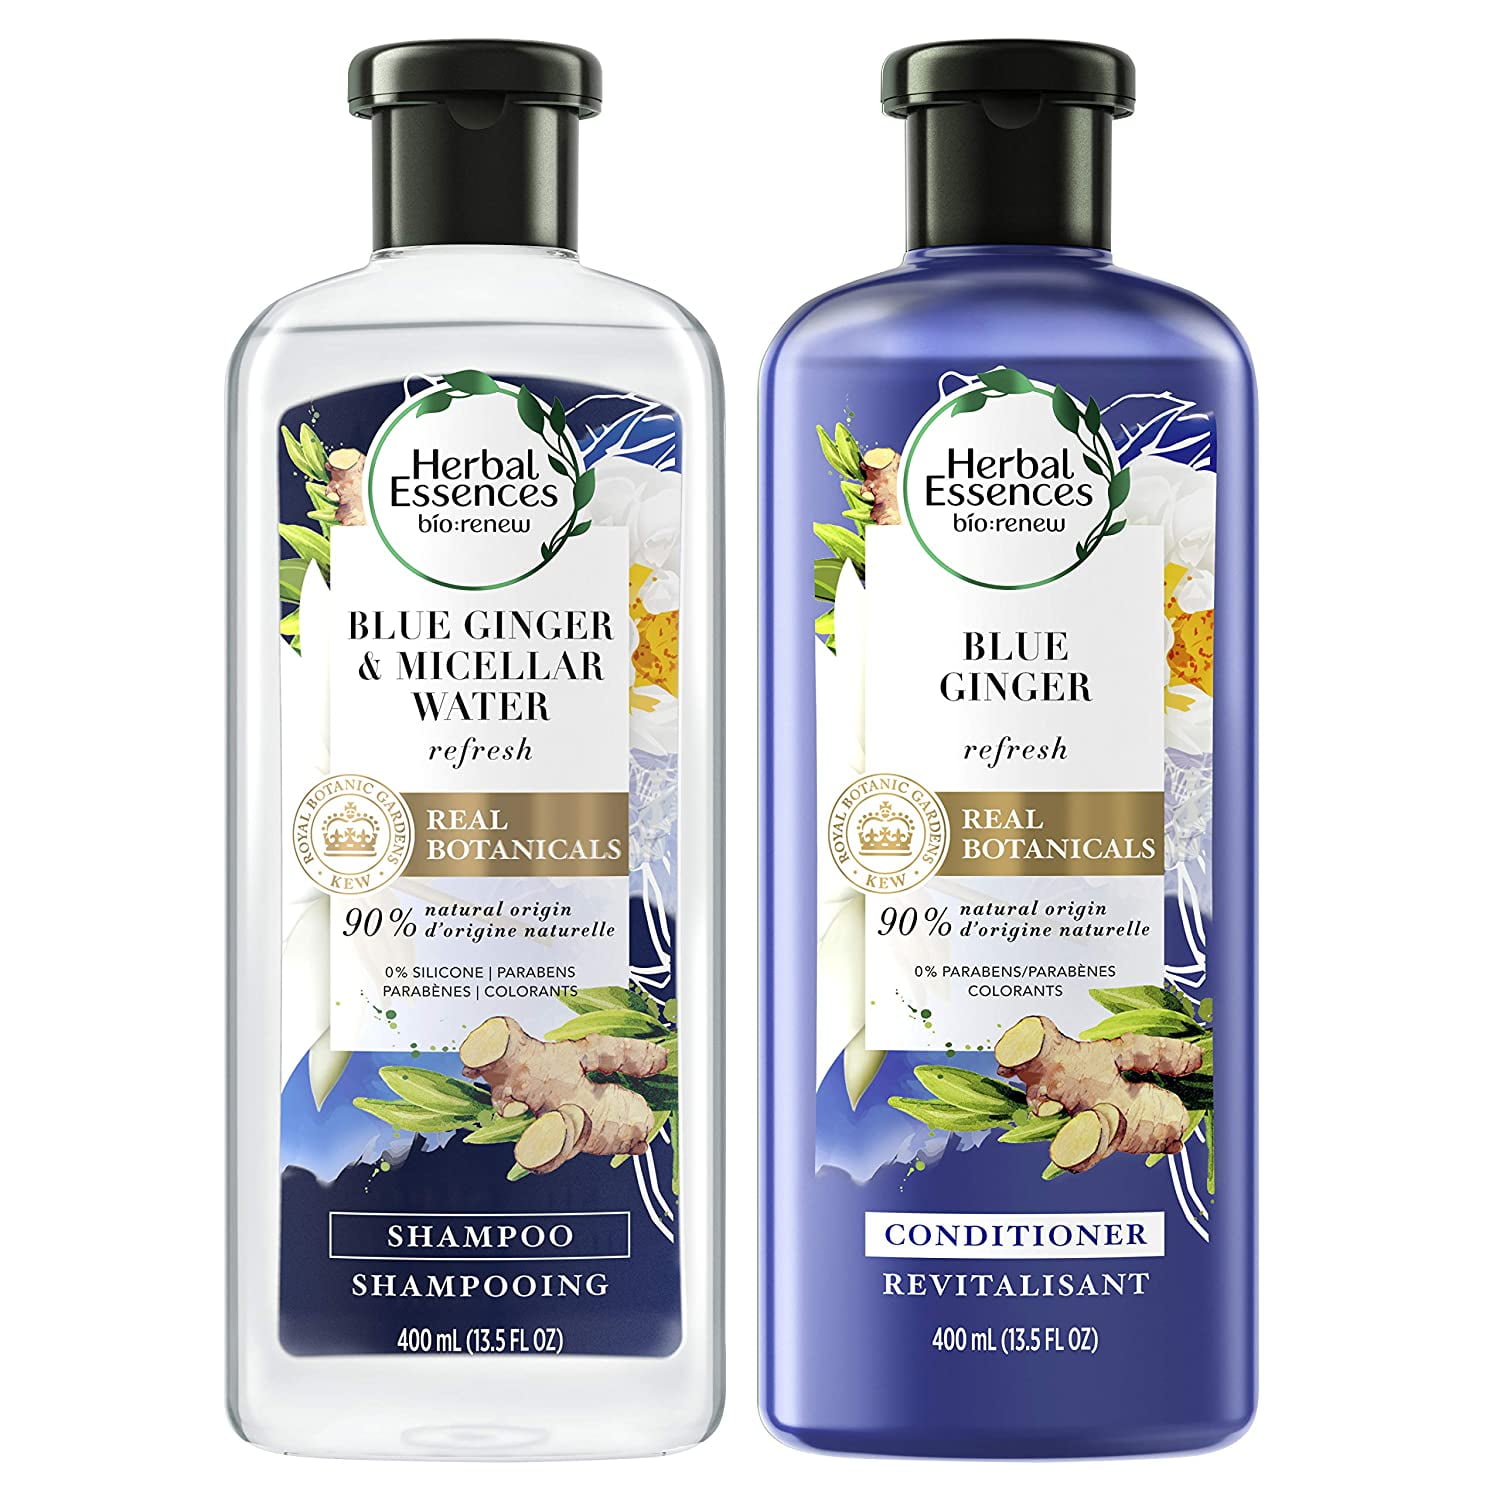 Herbal Essences, Shampoo & Conditioner Kit Natural Source Ingredients, For Fine Hair, Color Safe, BioRenew Micellar Water & Blue Ginger, 13.5 fl oz, - Walmart.com